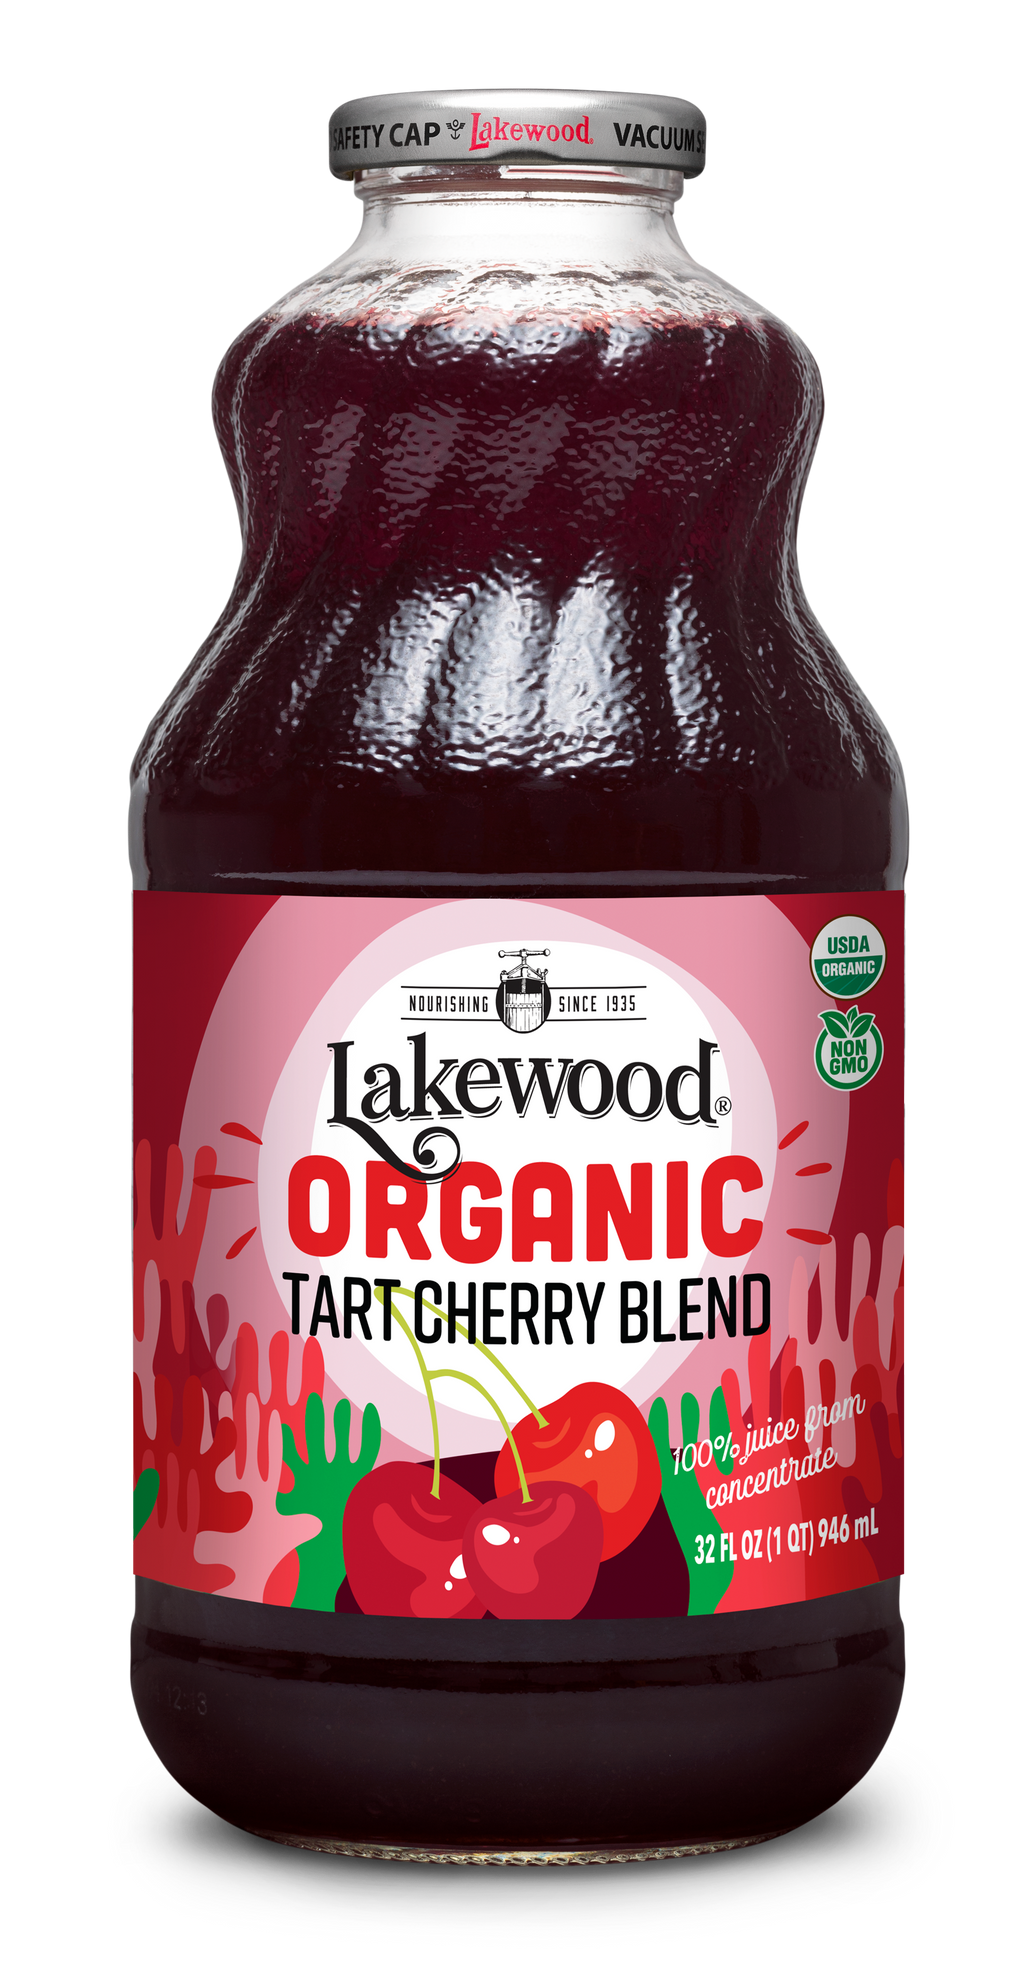 lakewood-organic-tart-cherry-juice-blend-fresh-pressed